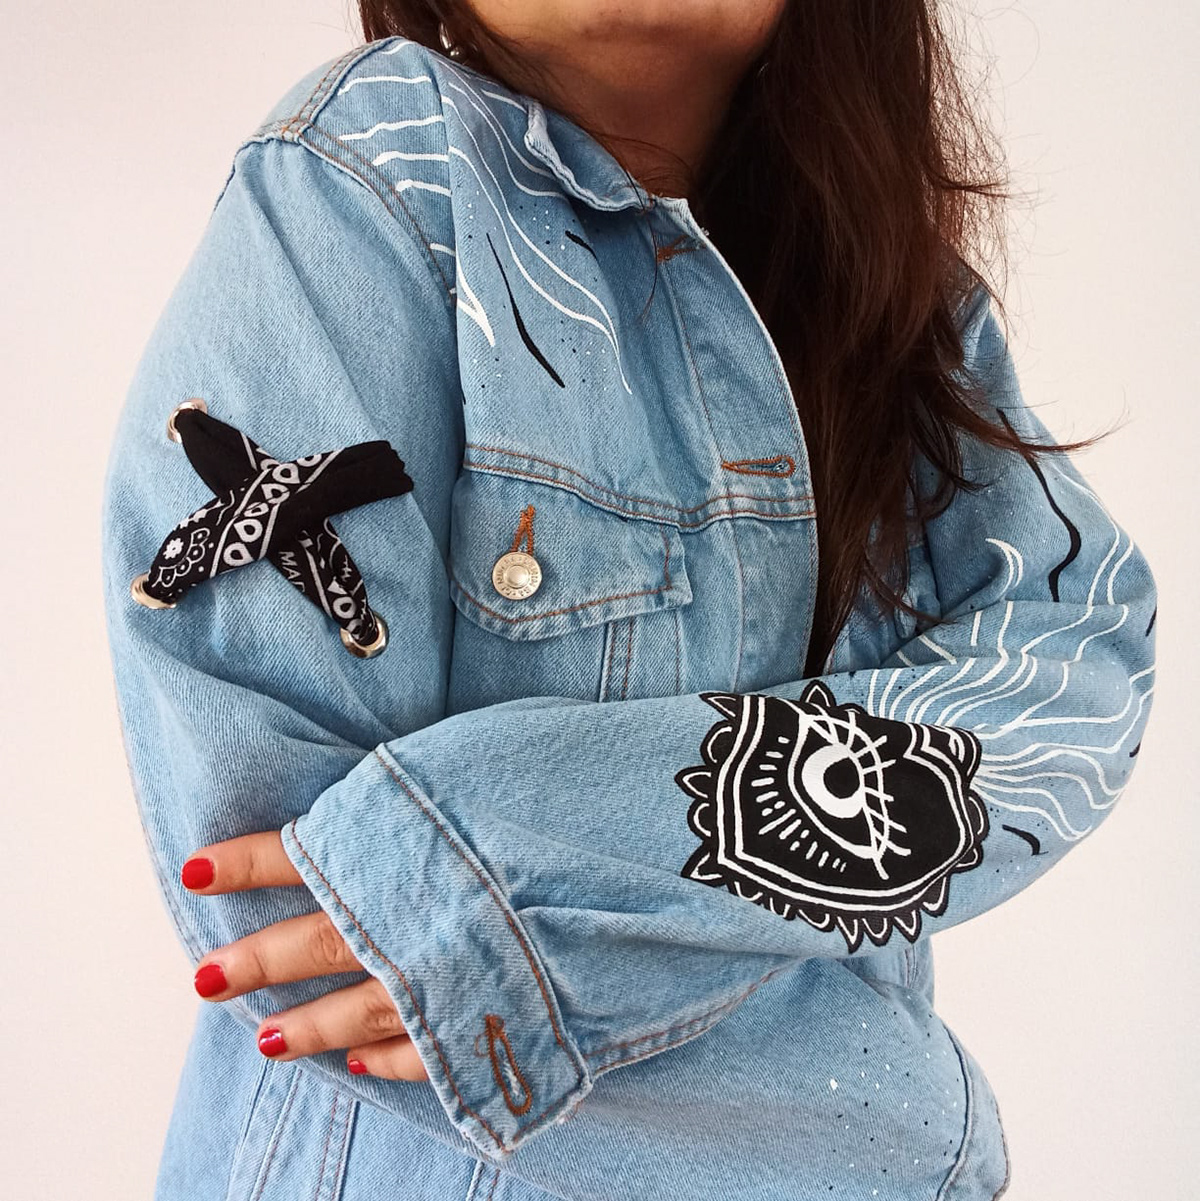 Clothing Custom Denim DIY fashion design handmade jeans moda punk rock